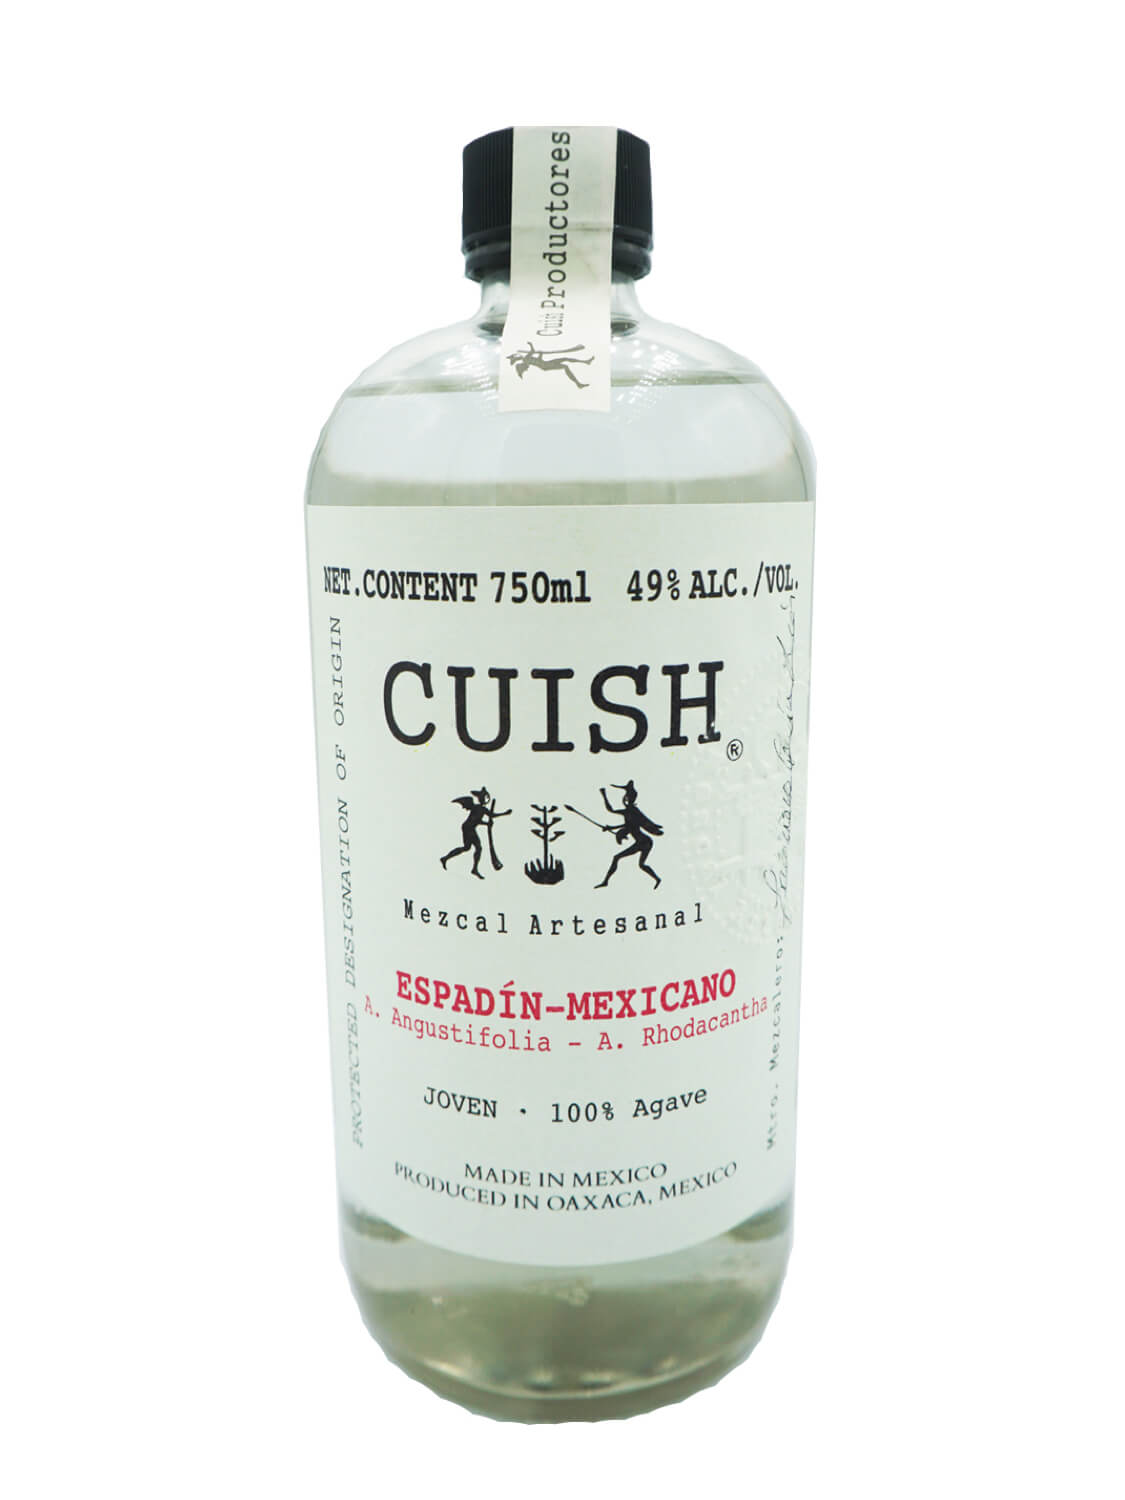 Cuish Espadin-Mexicano mezcal bottle